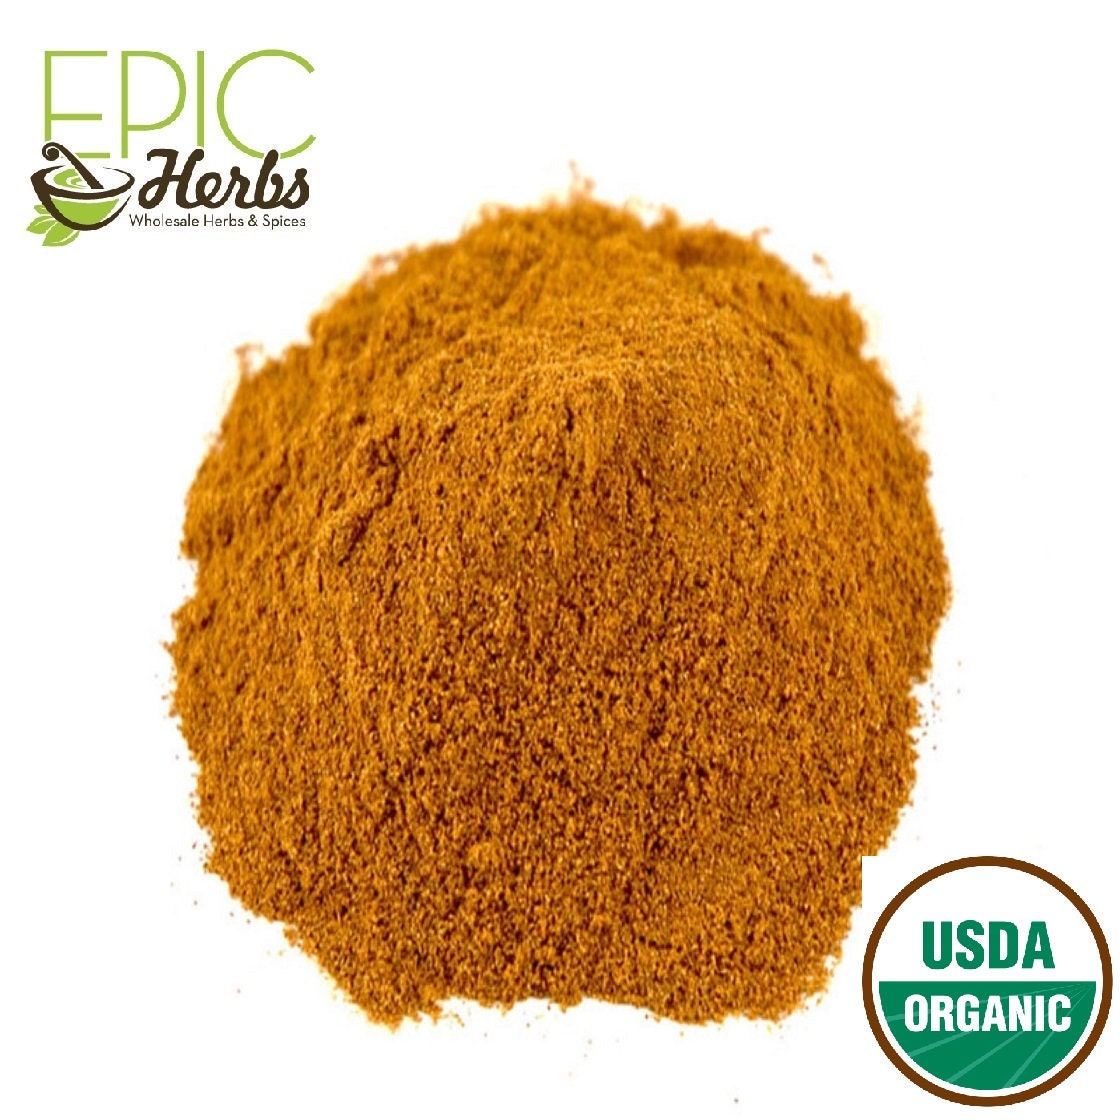 Cinnamon Powder, Certified Organic - 1 lb